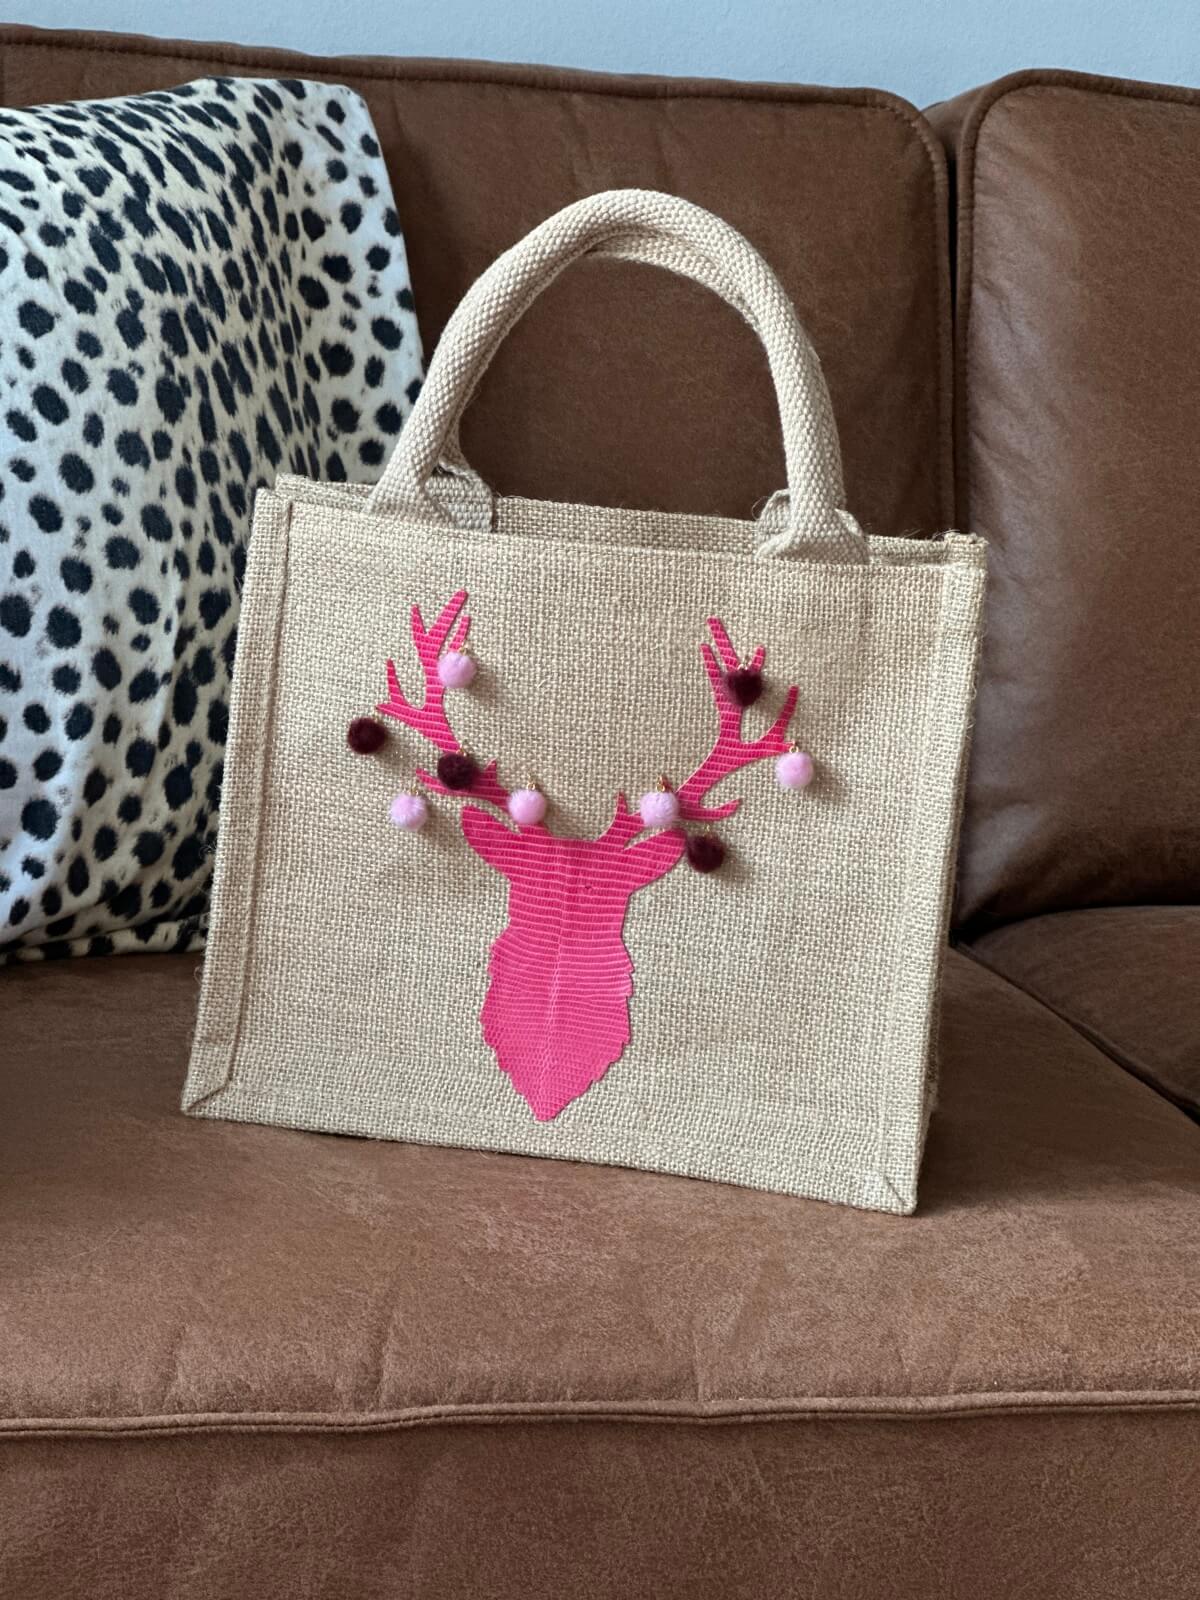 X-Mas lurex jute bag "Pink Deer", 26x22cm